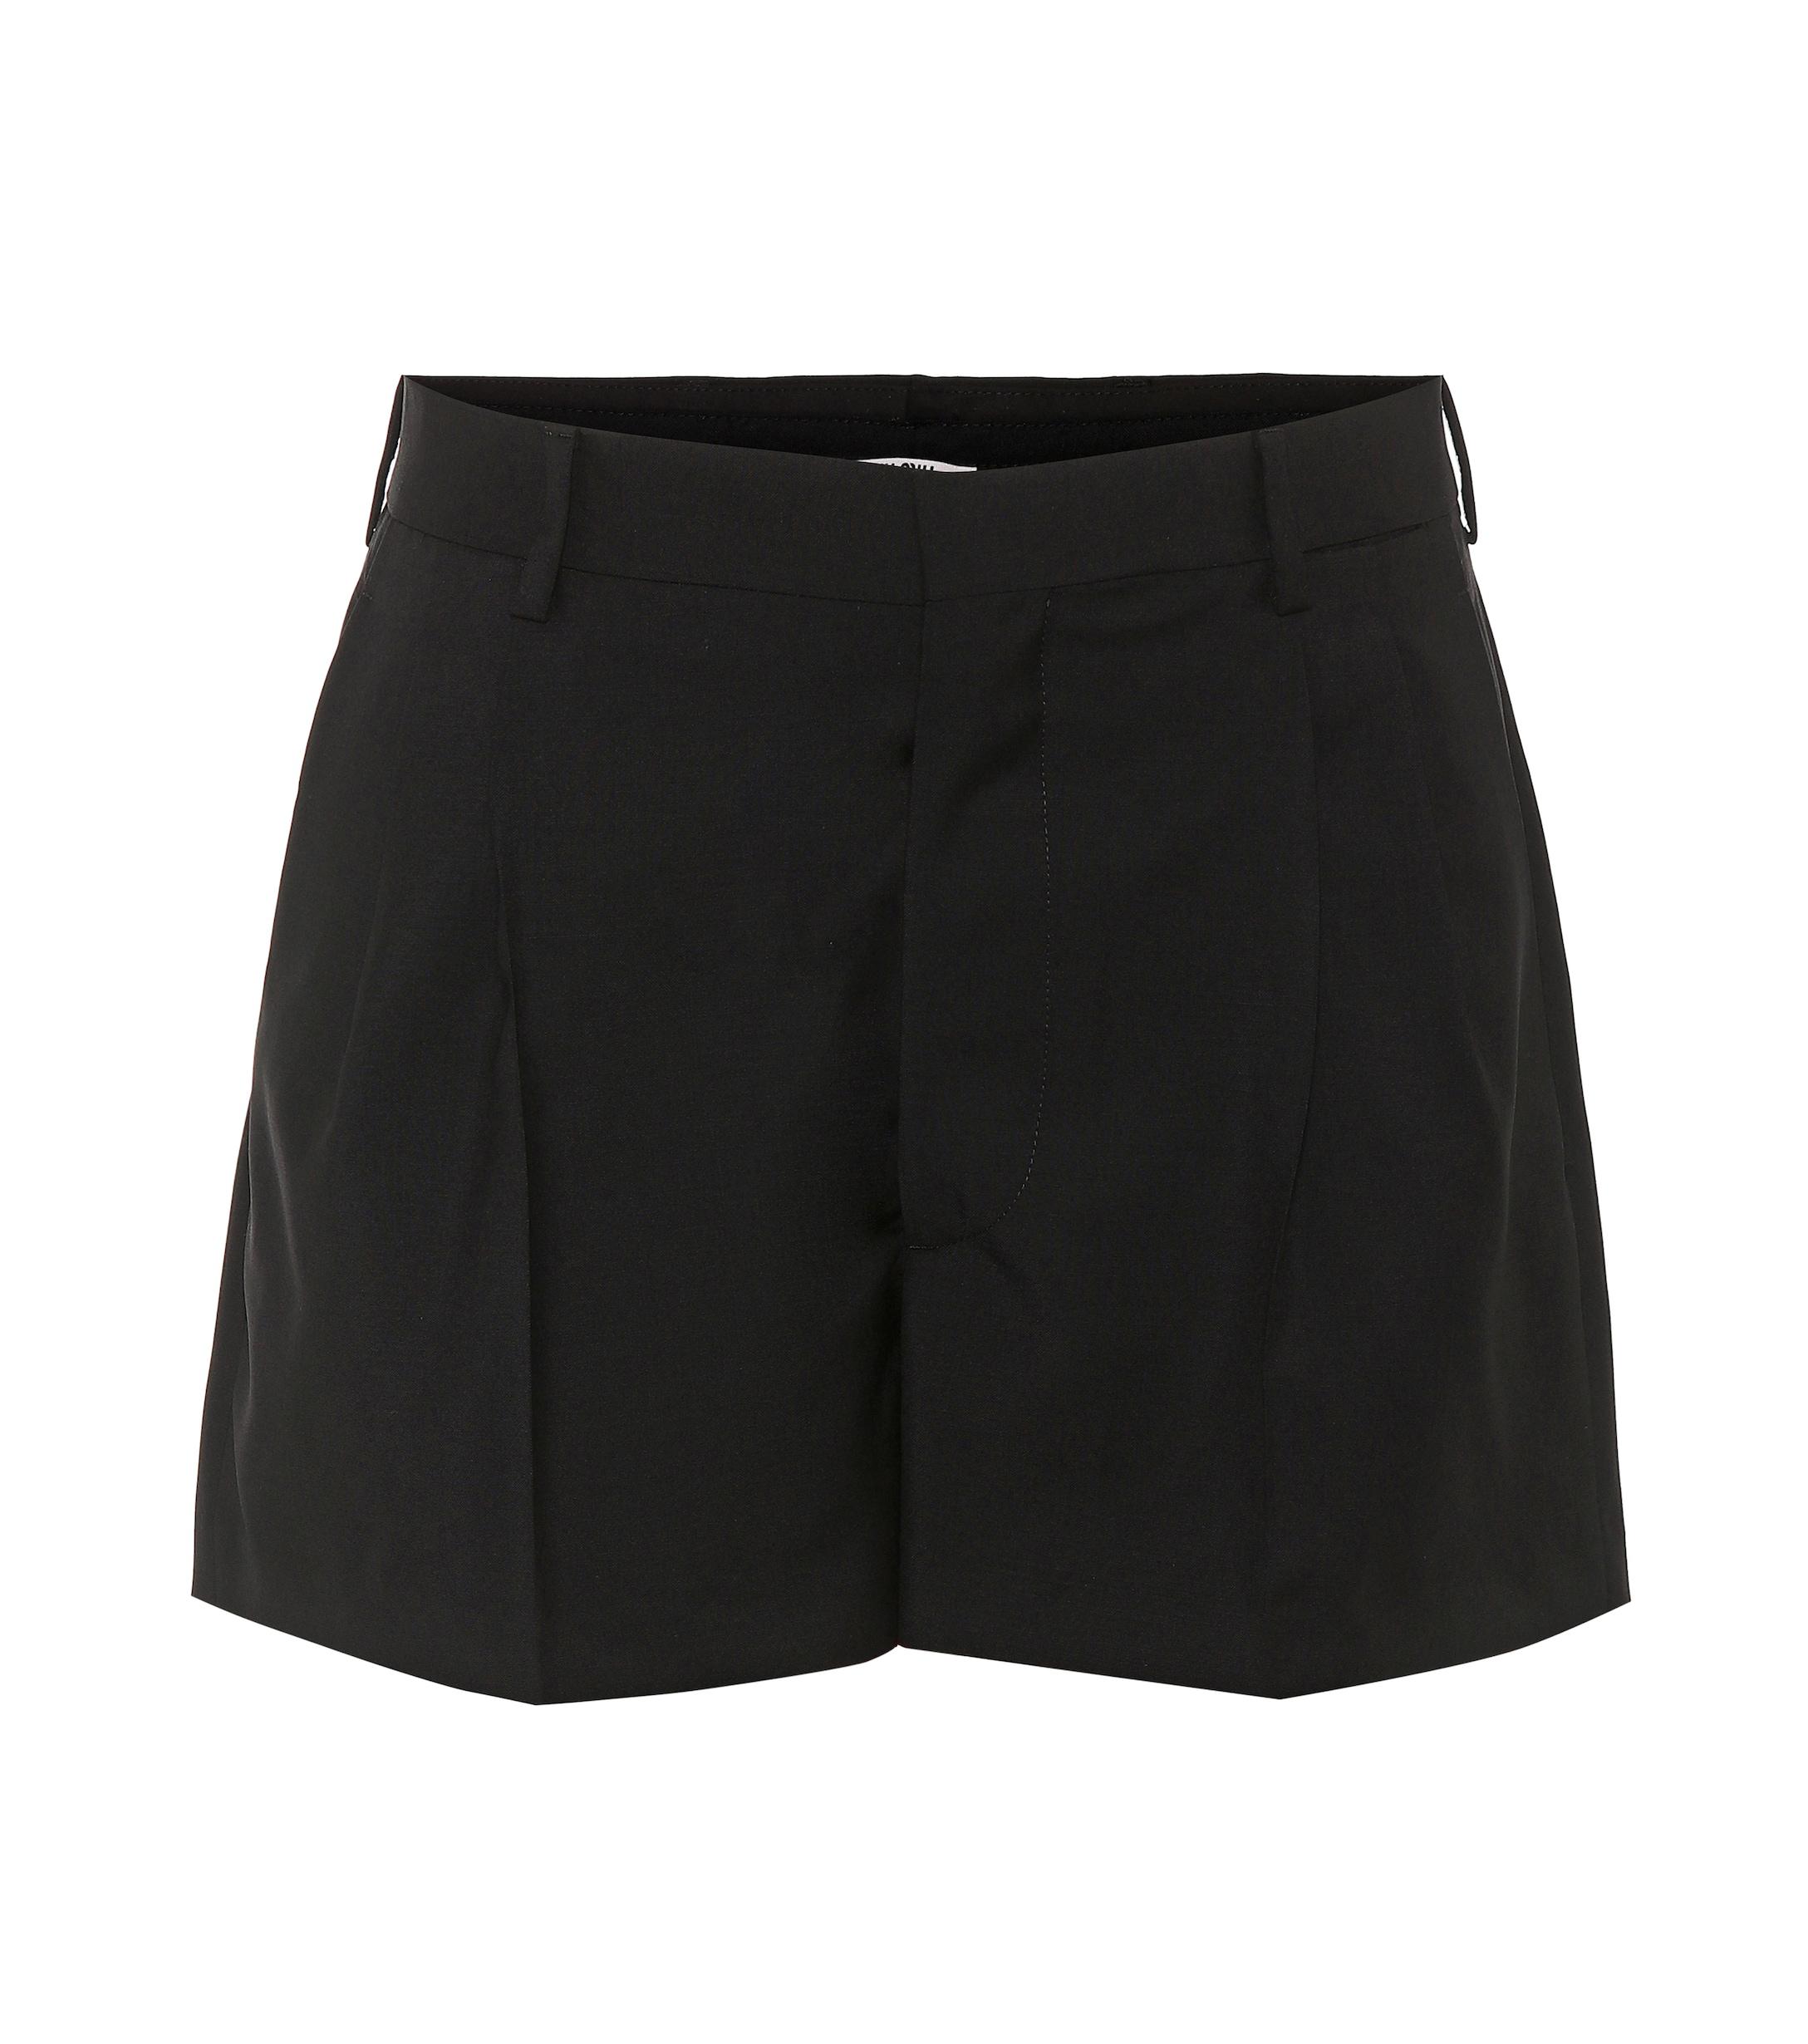 Miu Miu Wool And Mohair Shorts in Nero (Black) - Lyst